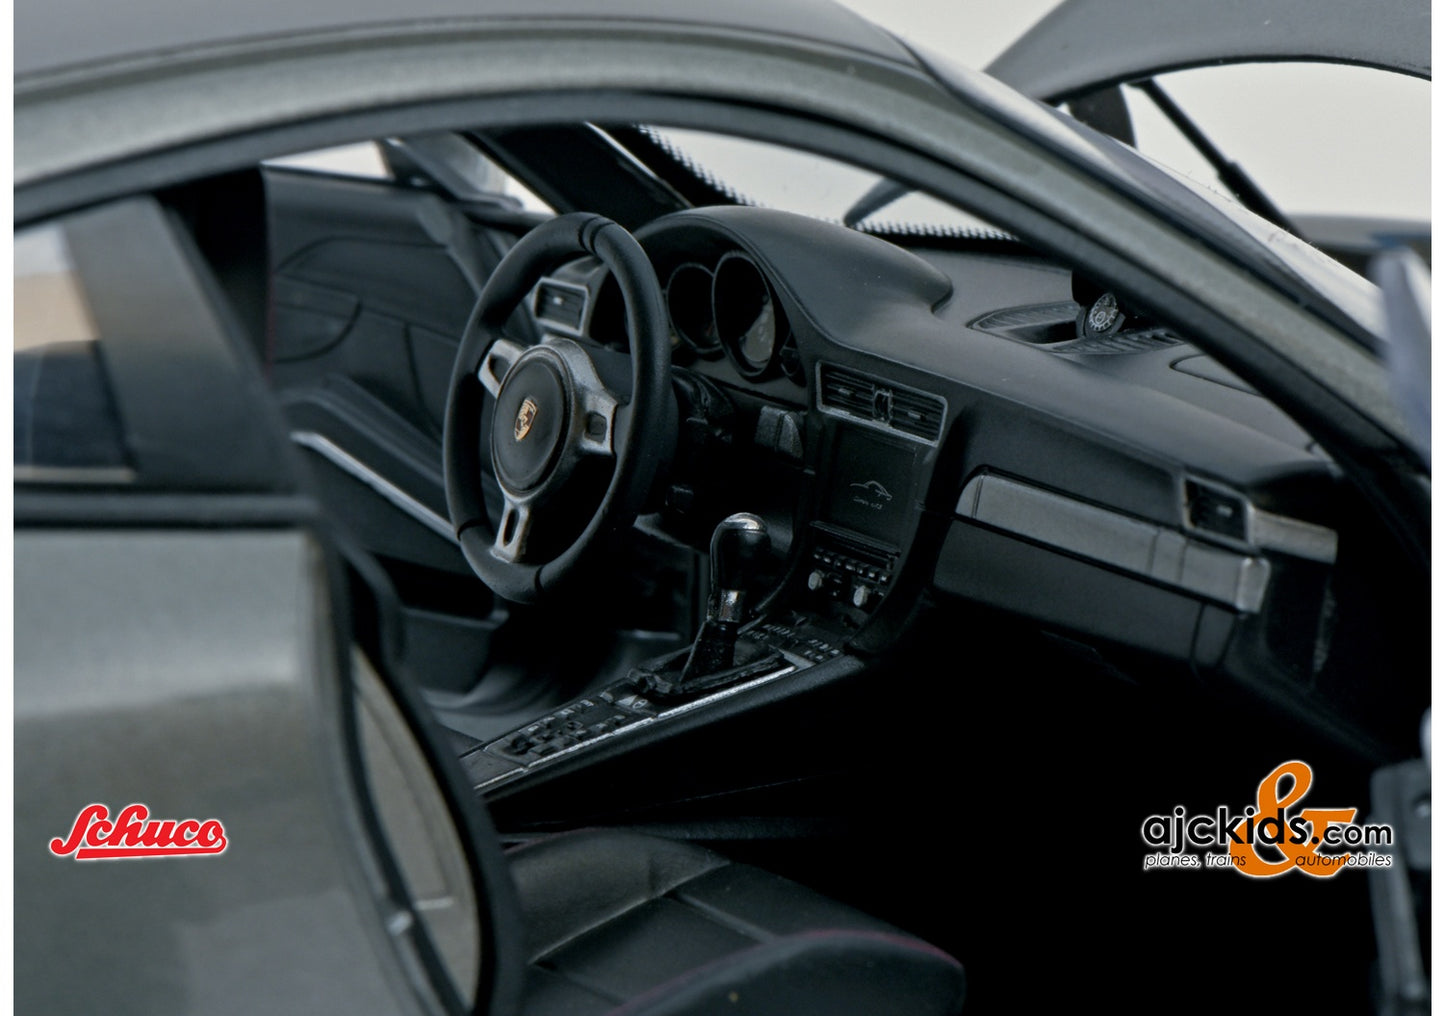 Schuco 450039600 - Porsche 911 GTS grey 1:18